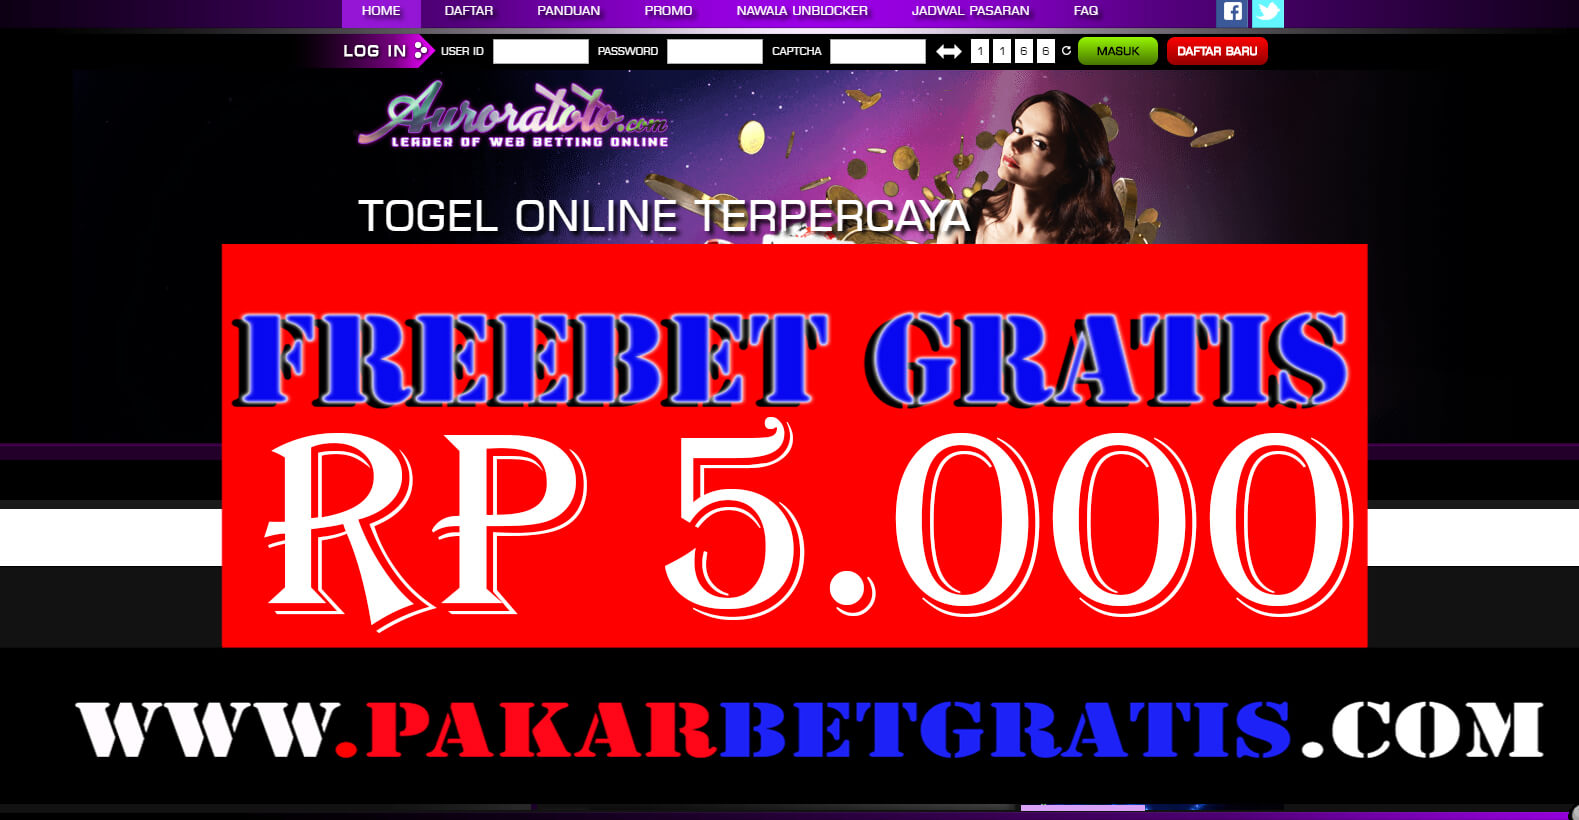 Freebet gratis auroratoto Rp 5.000 Tanpa deposit